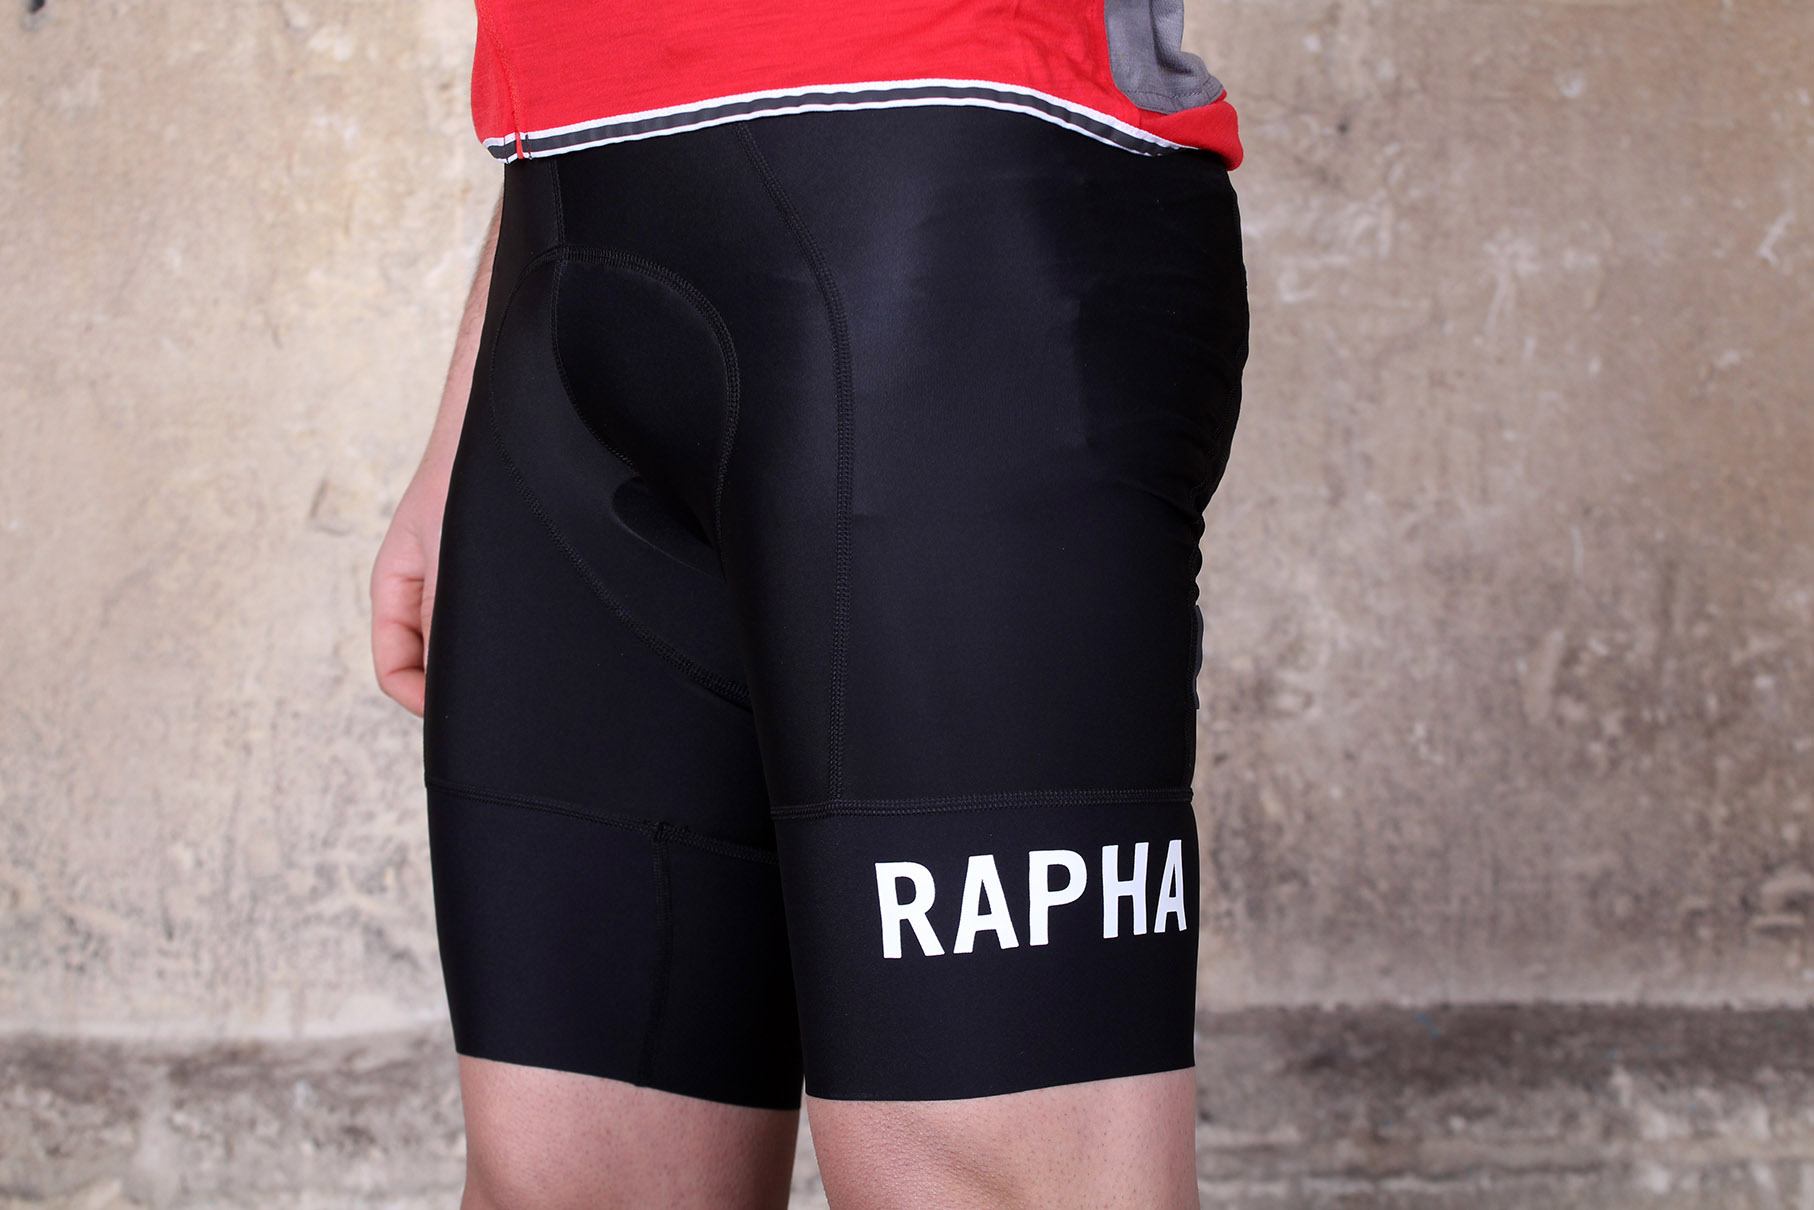 Review: Rapha Pro Team Bib Shorts II | road.cc